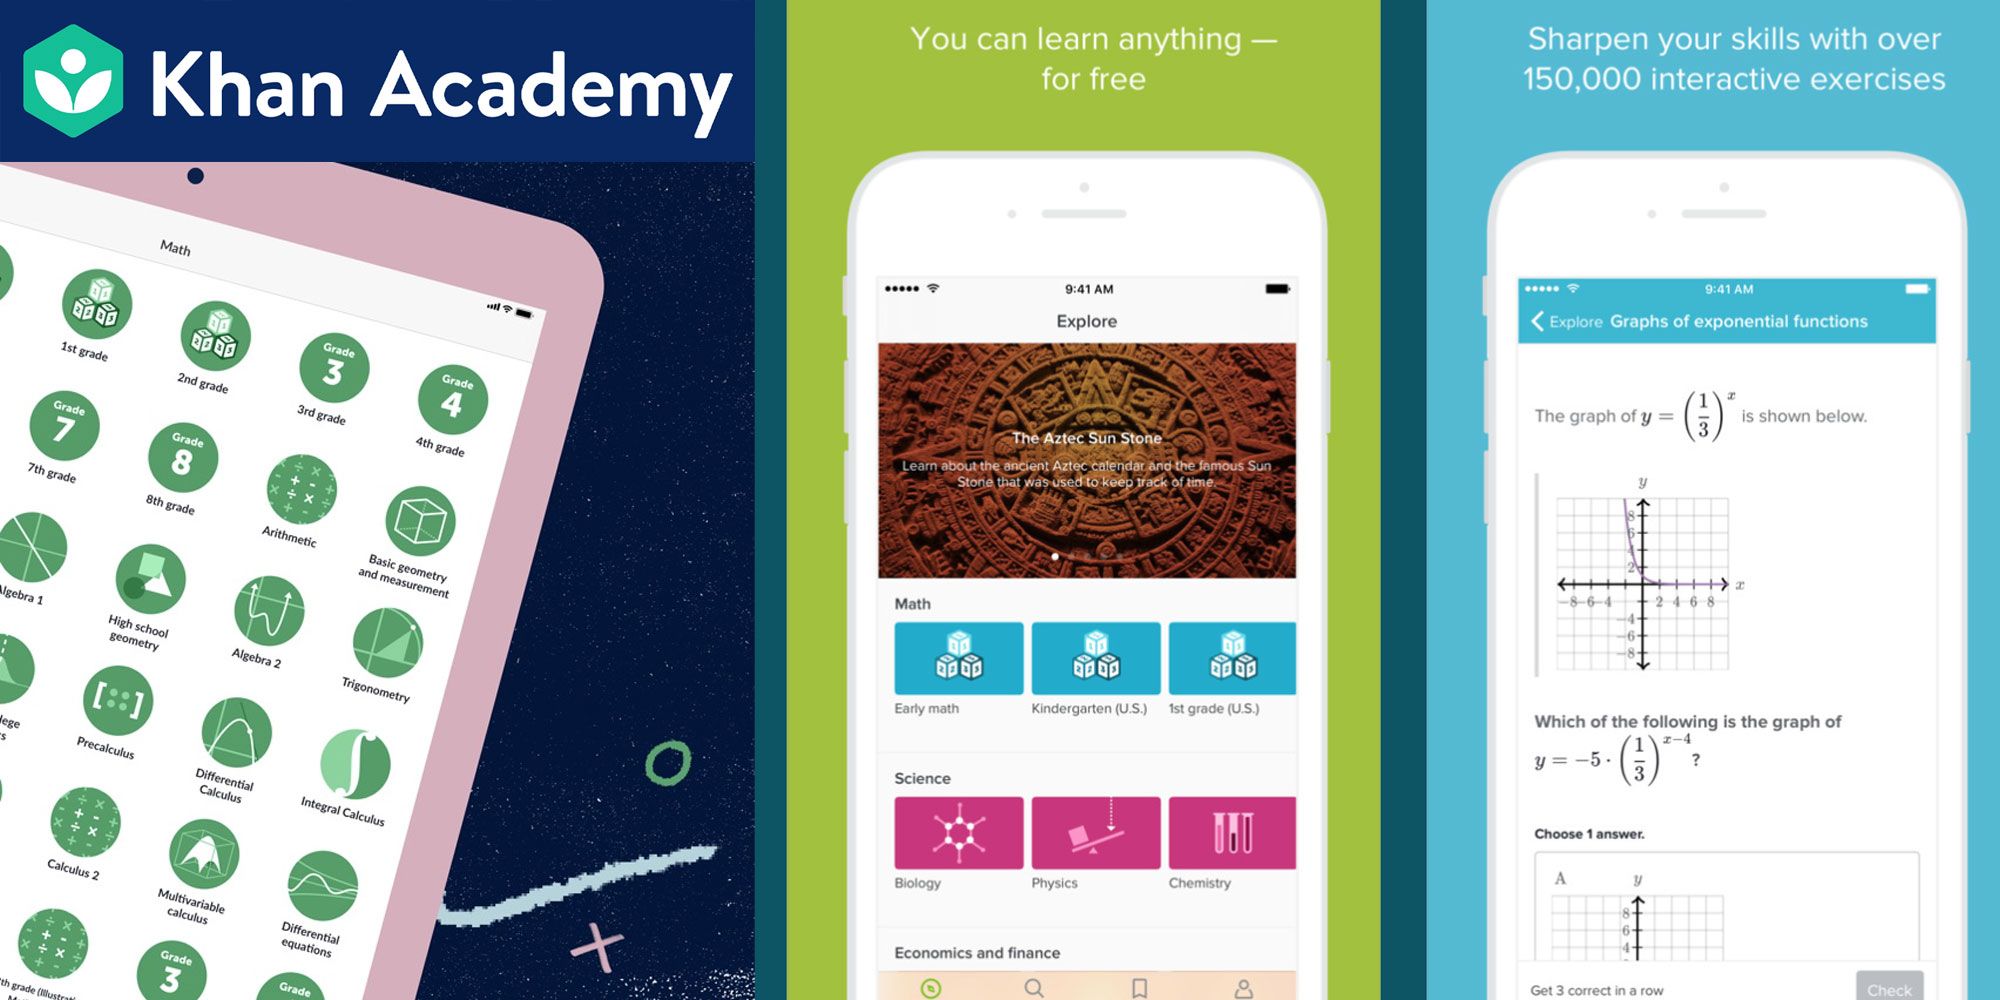 An image of the Khan Academy app